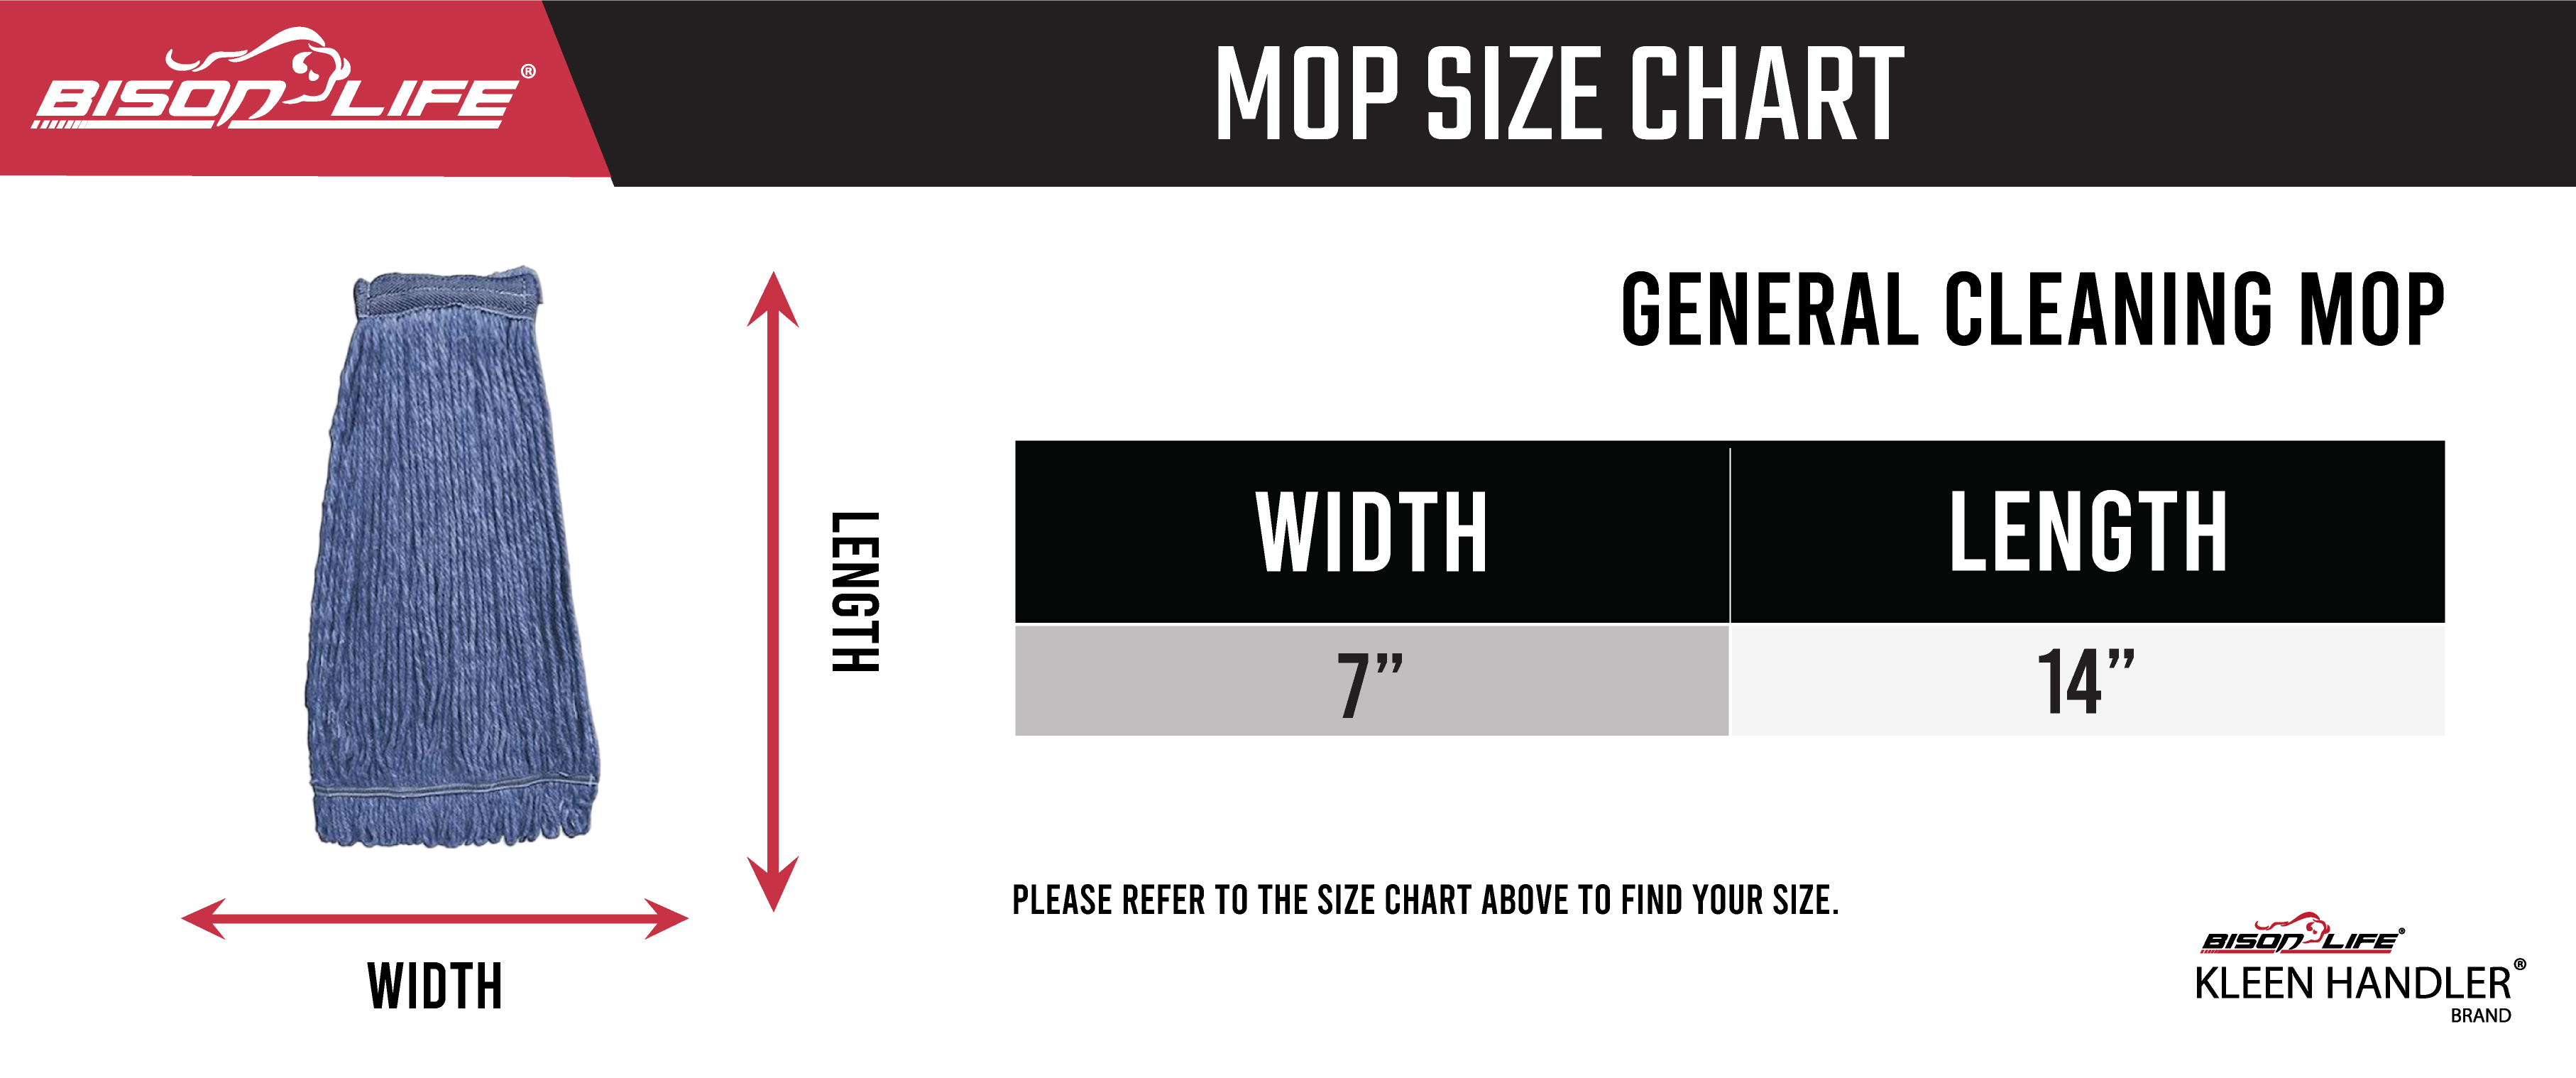 mop size chart